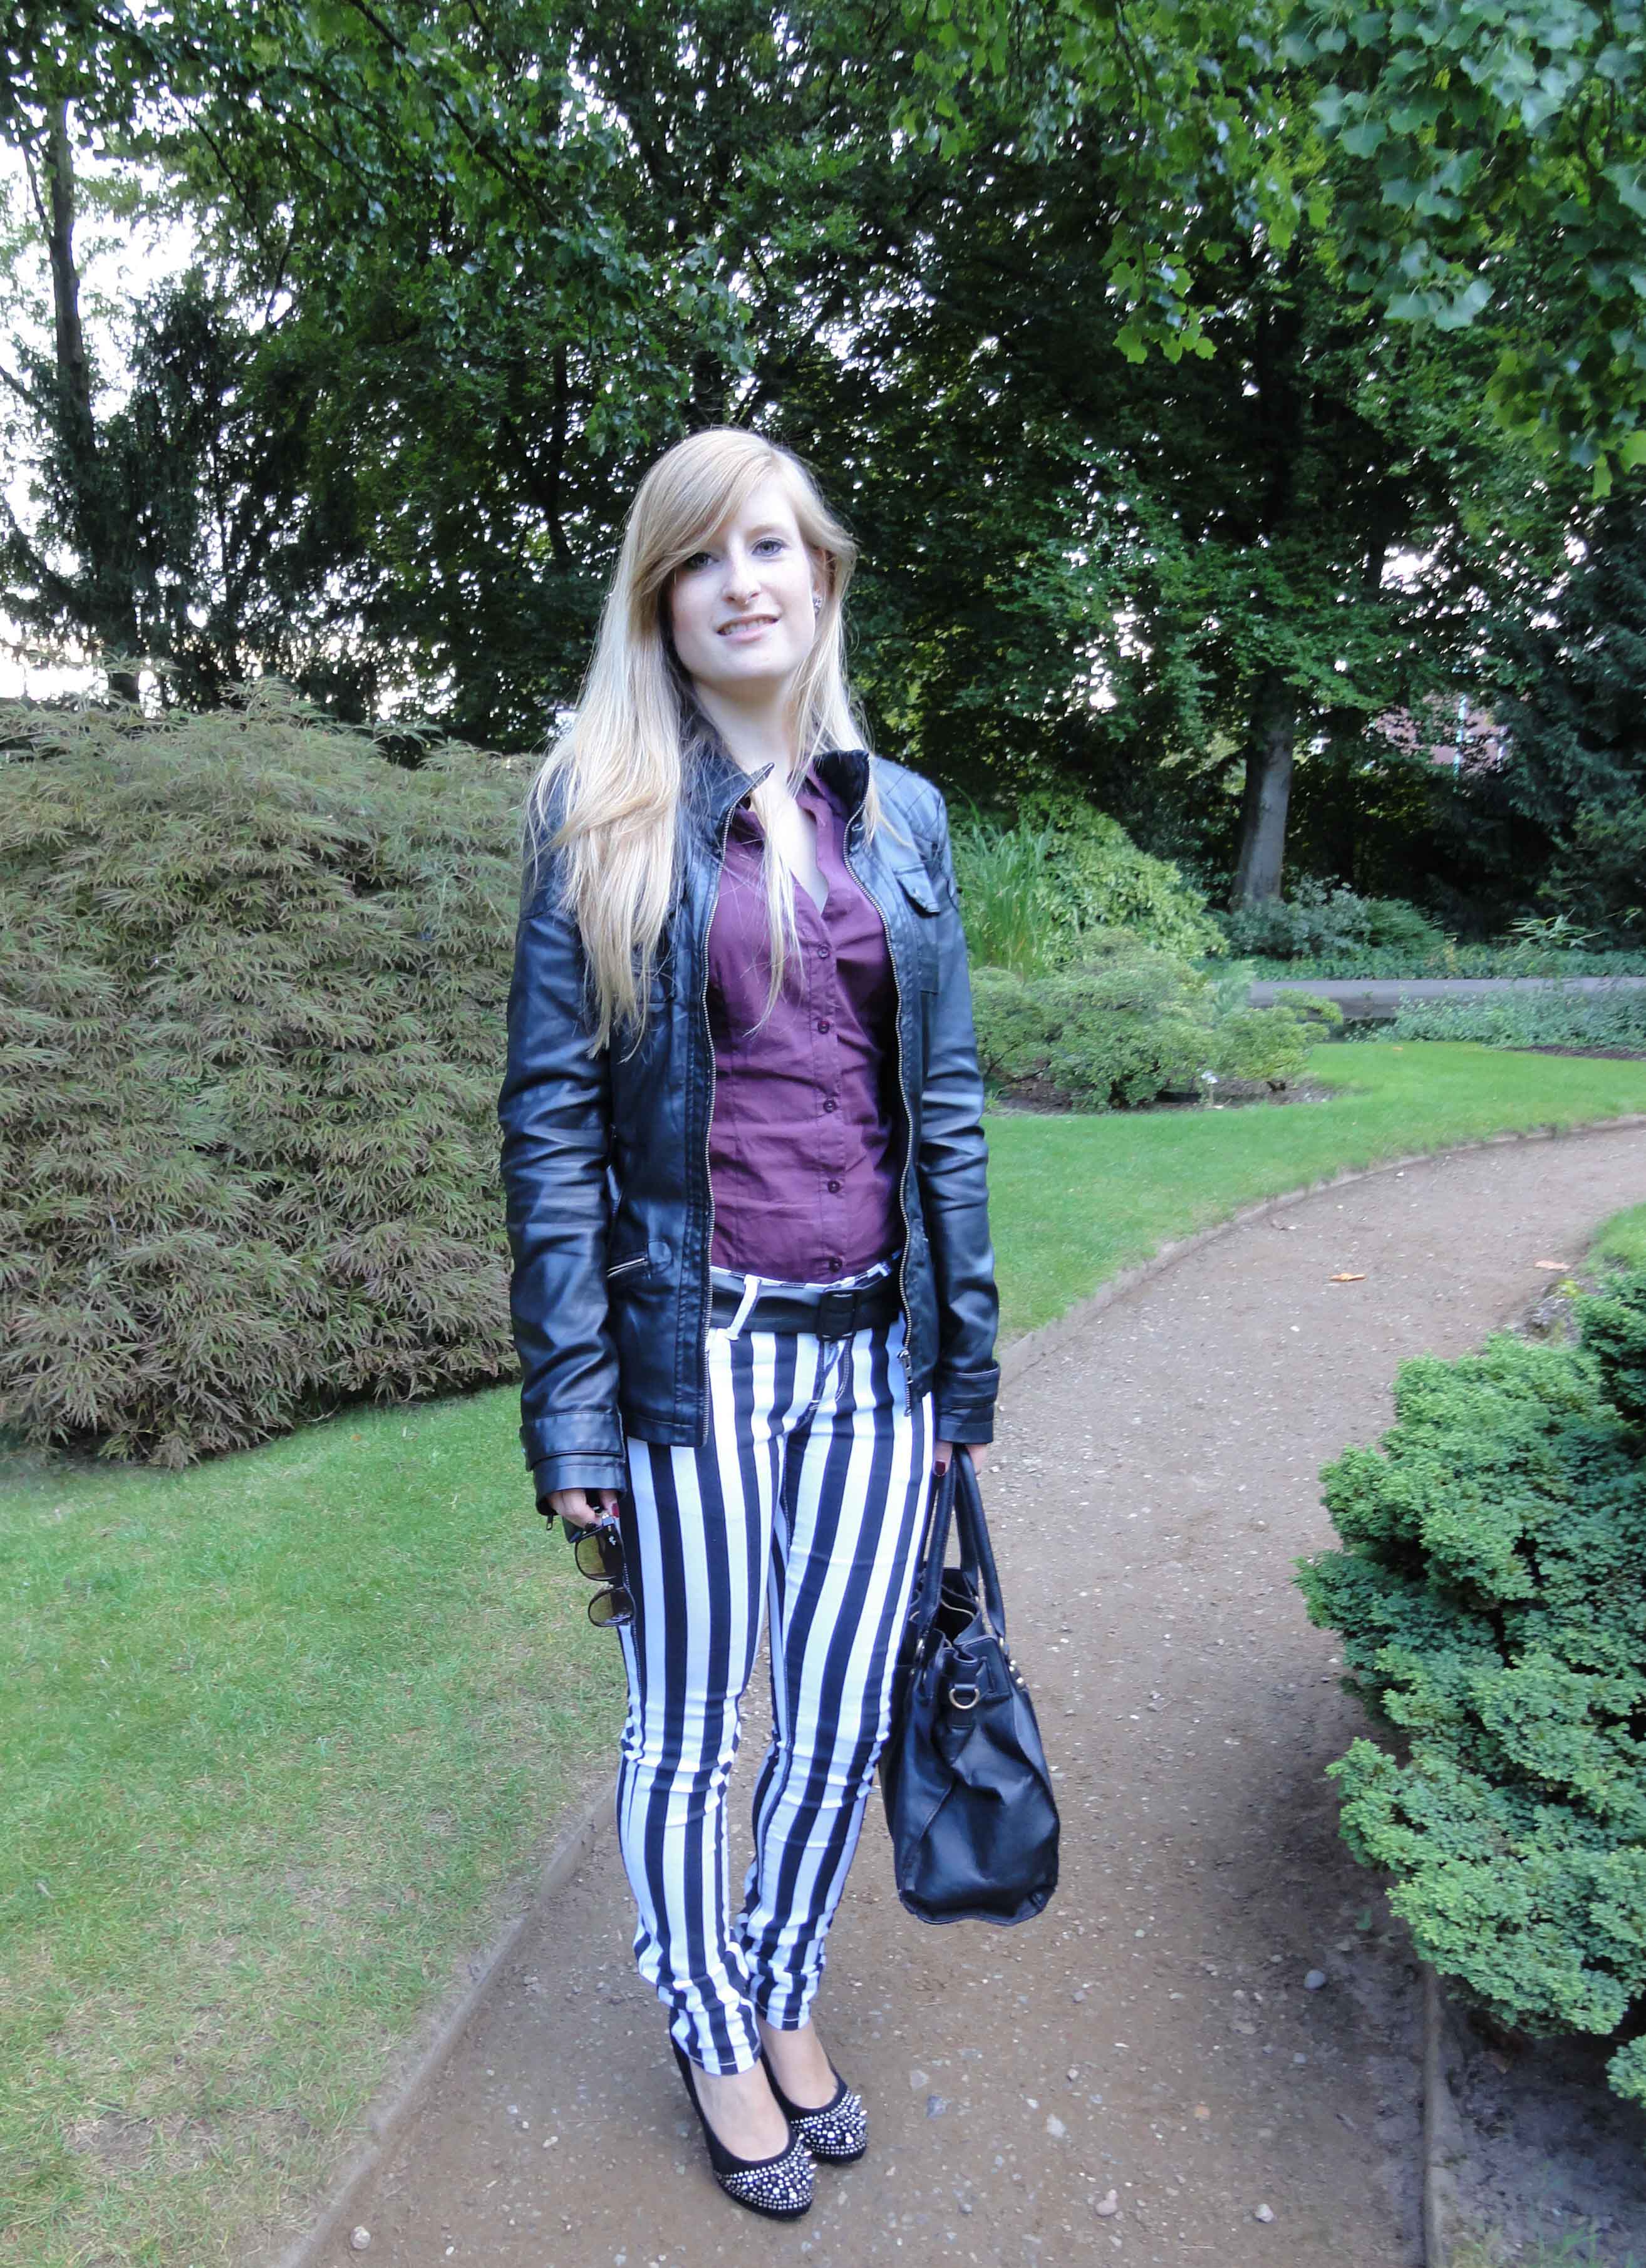 Stripes Rules Modeblog schwarz weiß gestreifte Hose kombinieren streifen Outfit schwarze Lederjacke jajpanischer Garten 5